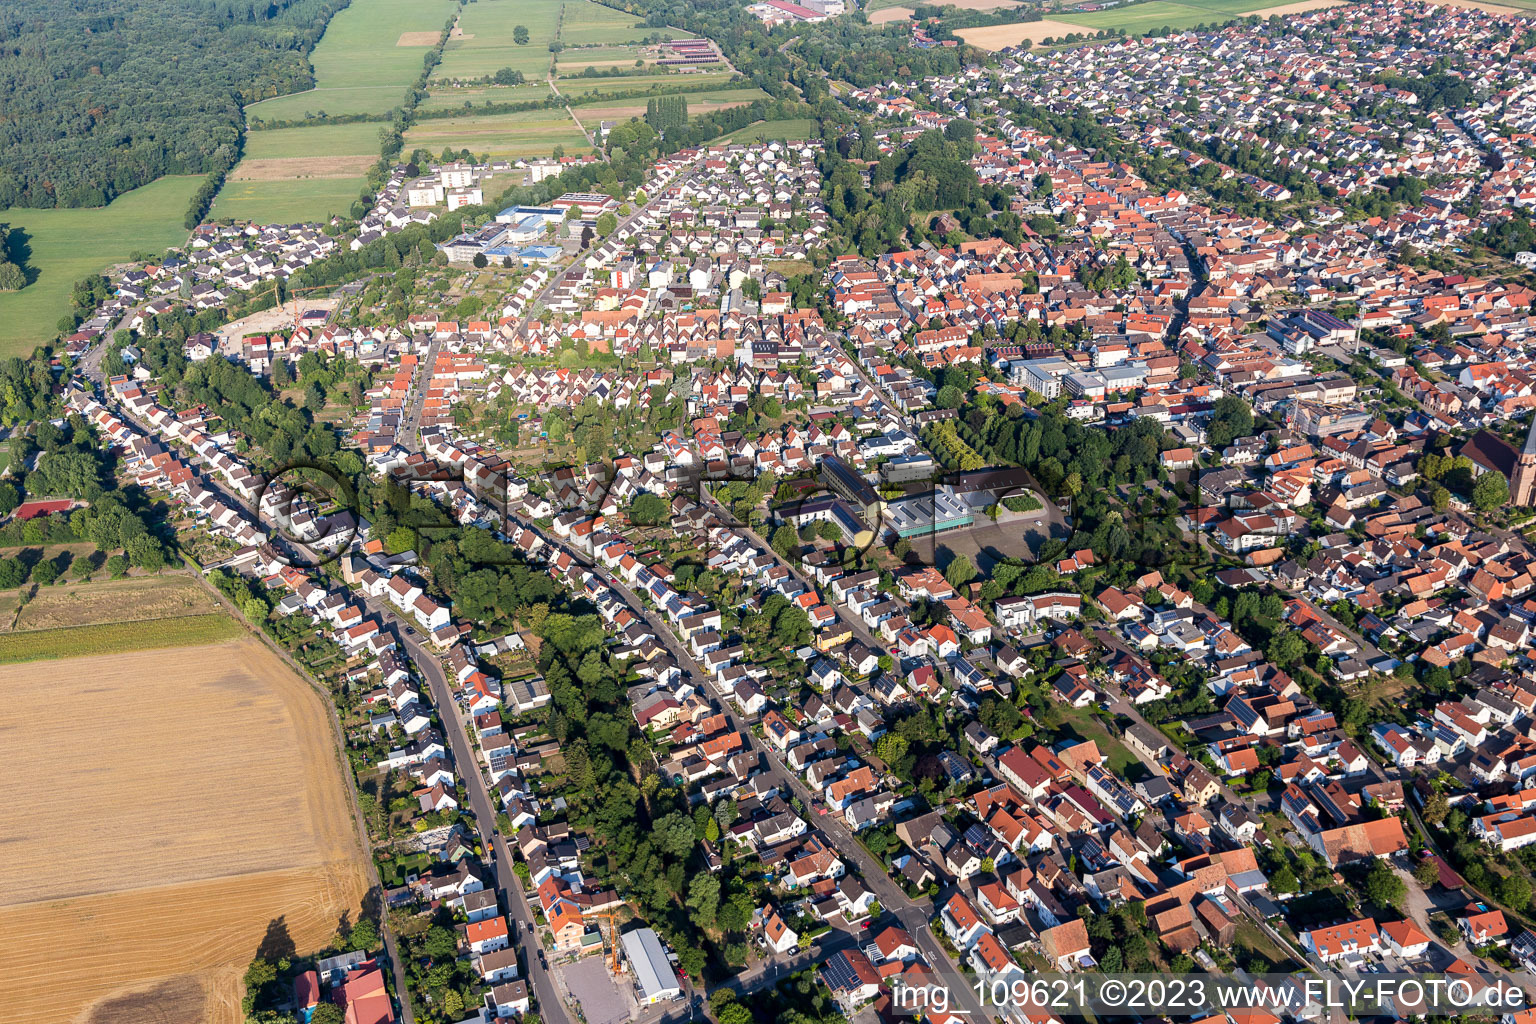 District Herxheim in Herxheim bei Landau/Pfalz in the state Rhineland-Palatinate, Germany from the plane